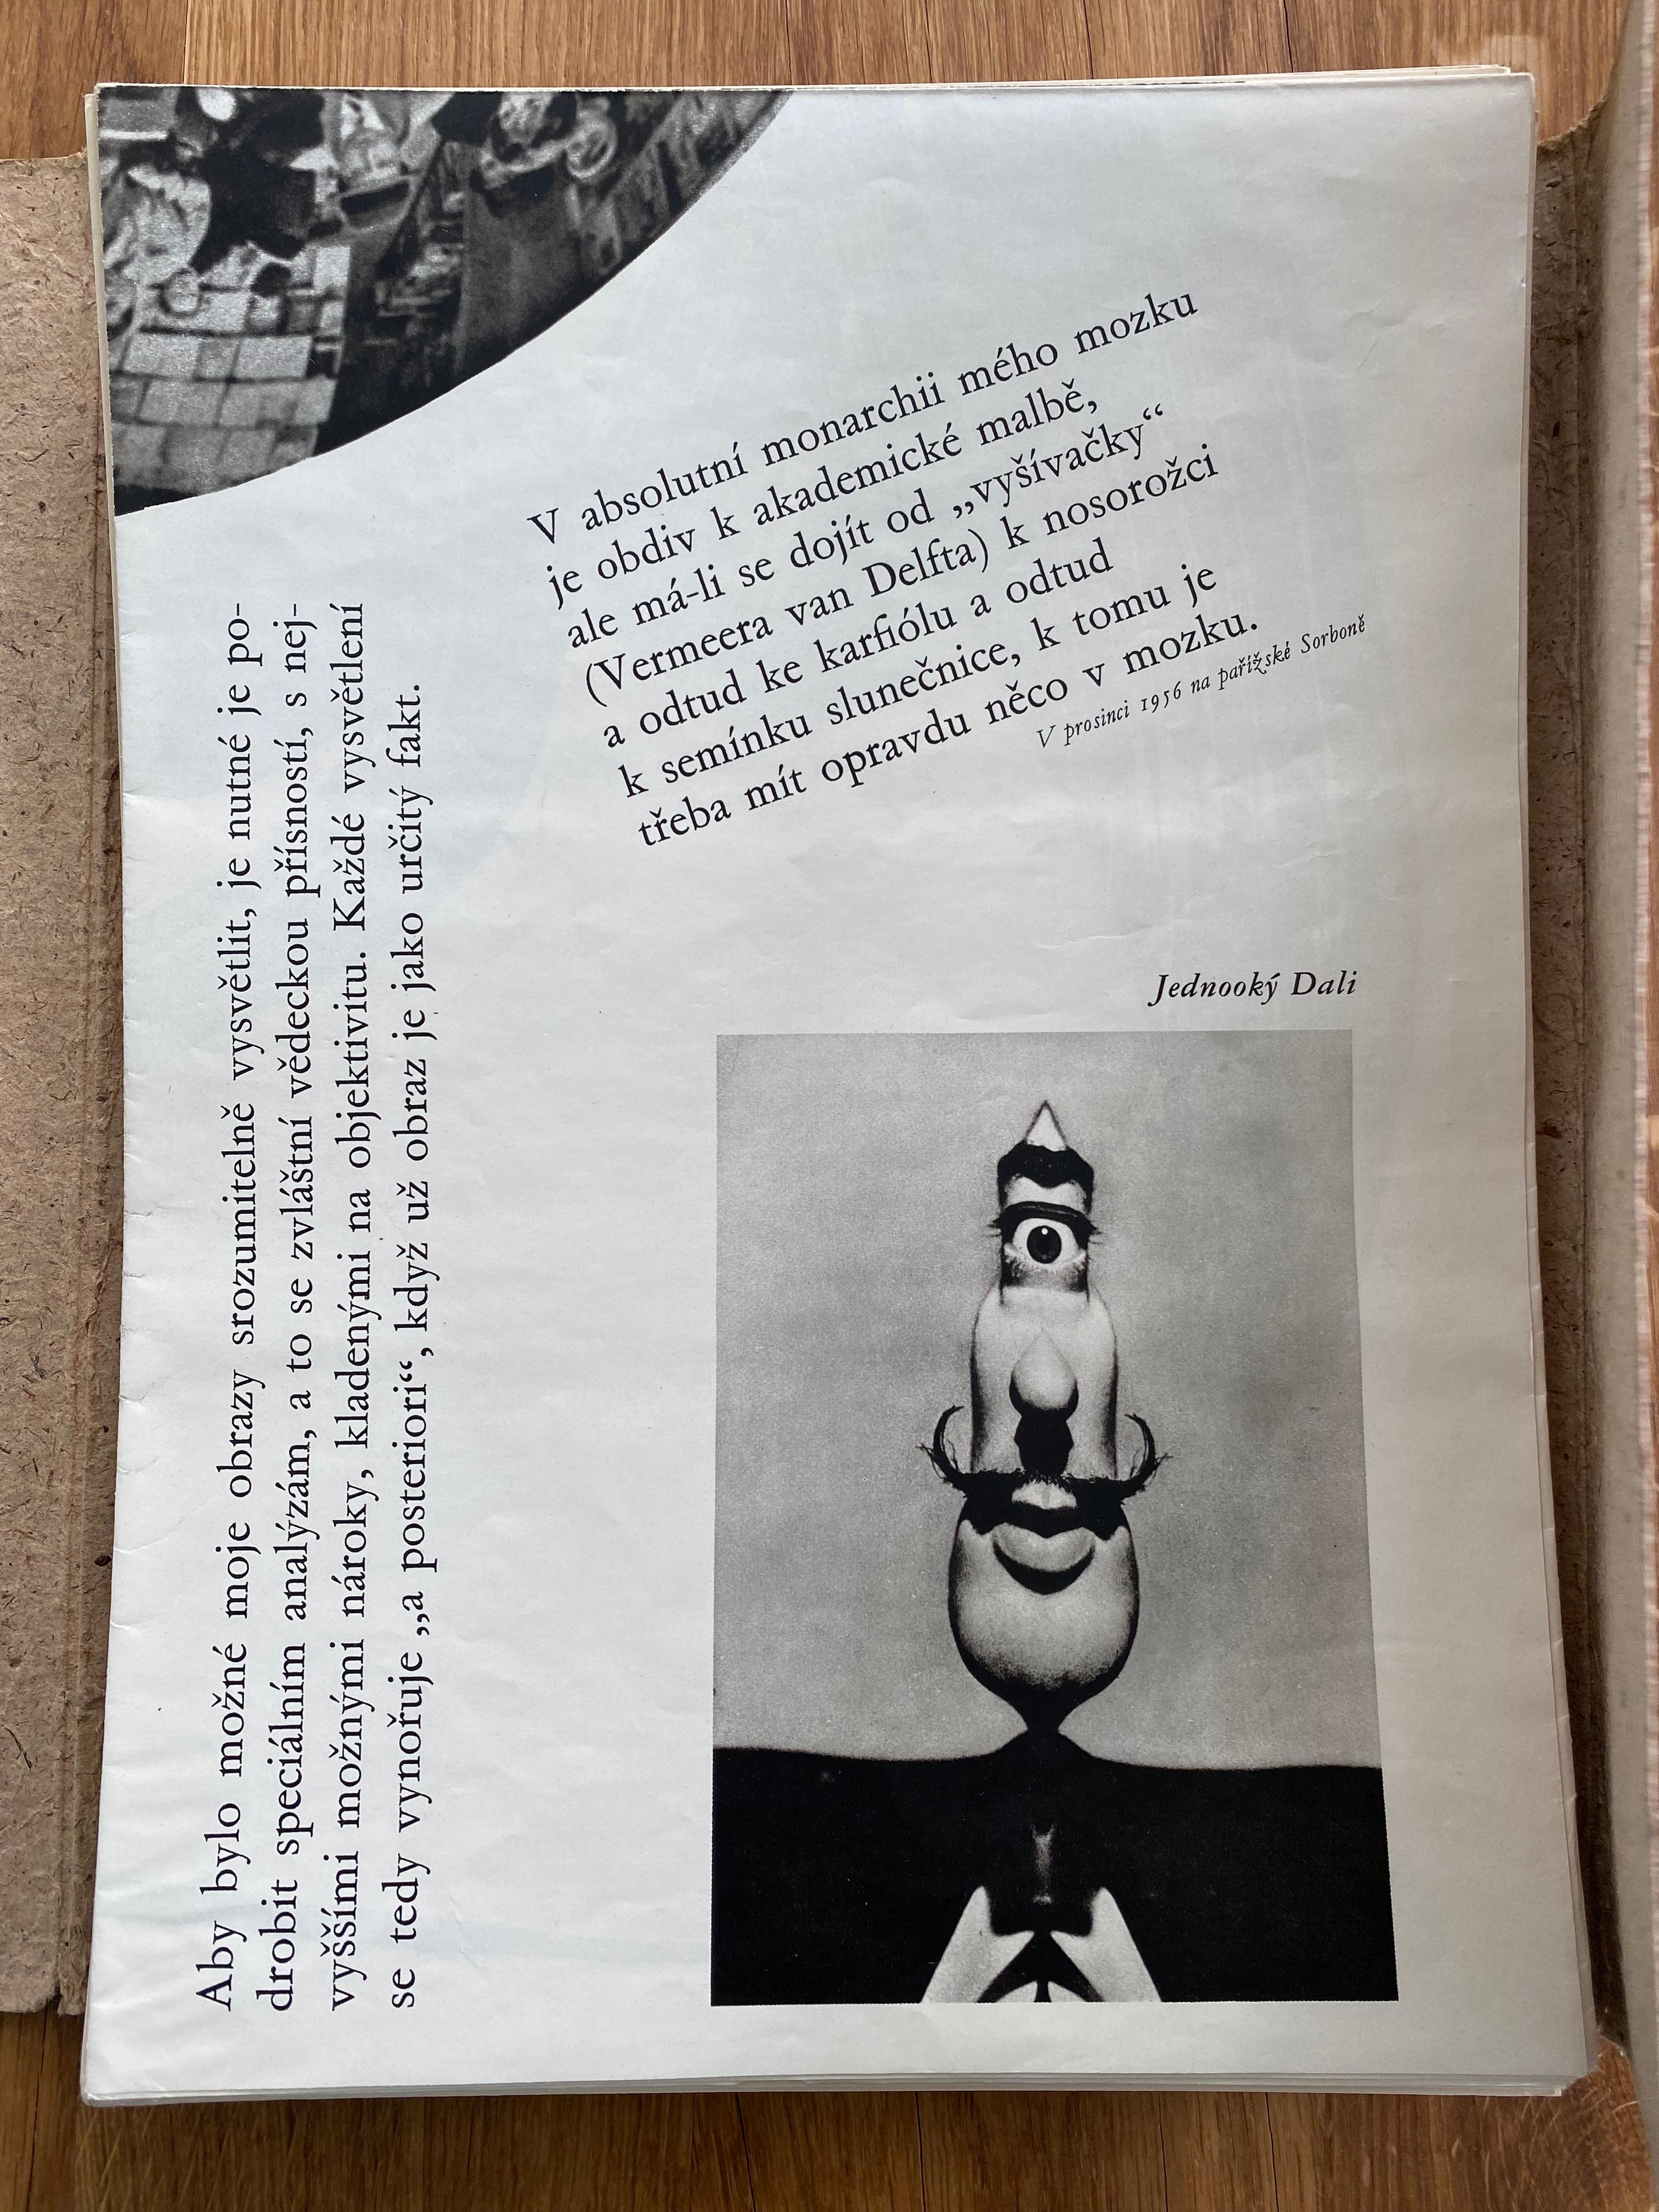 Salvador Dali 
Portfolio expo Prague 1967 
Complete 
Excellent condition 
. Original exhibition poster 97 x 67 cms
. 40 litho fac similes of original drawings 33.5 x 24 cms
1967
690 euros